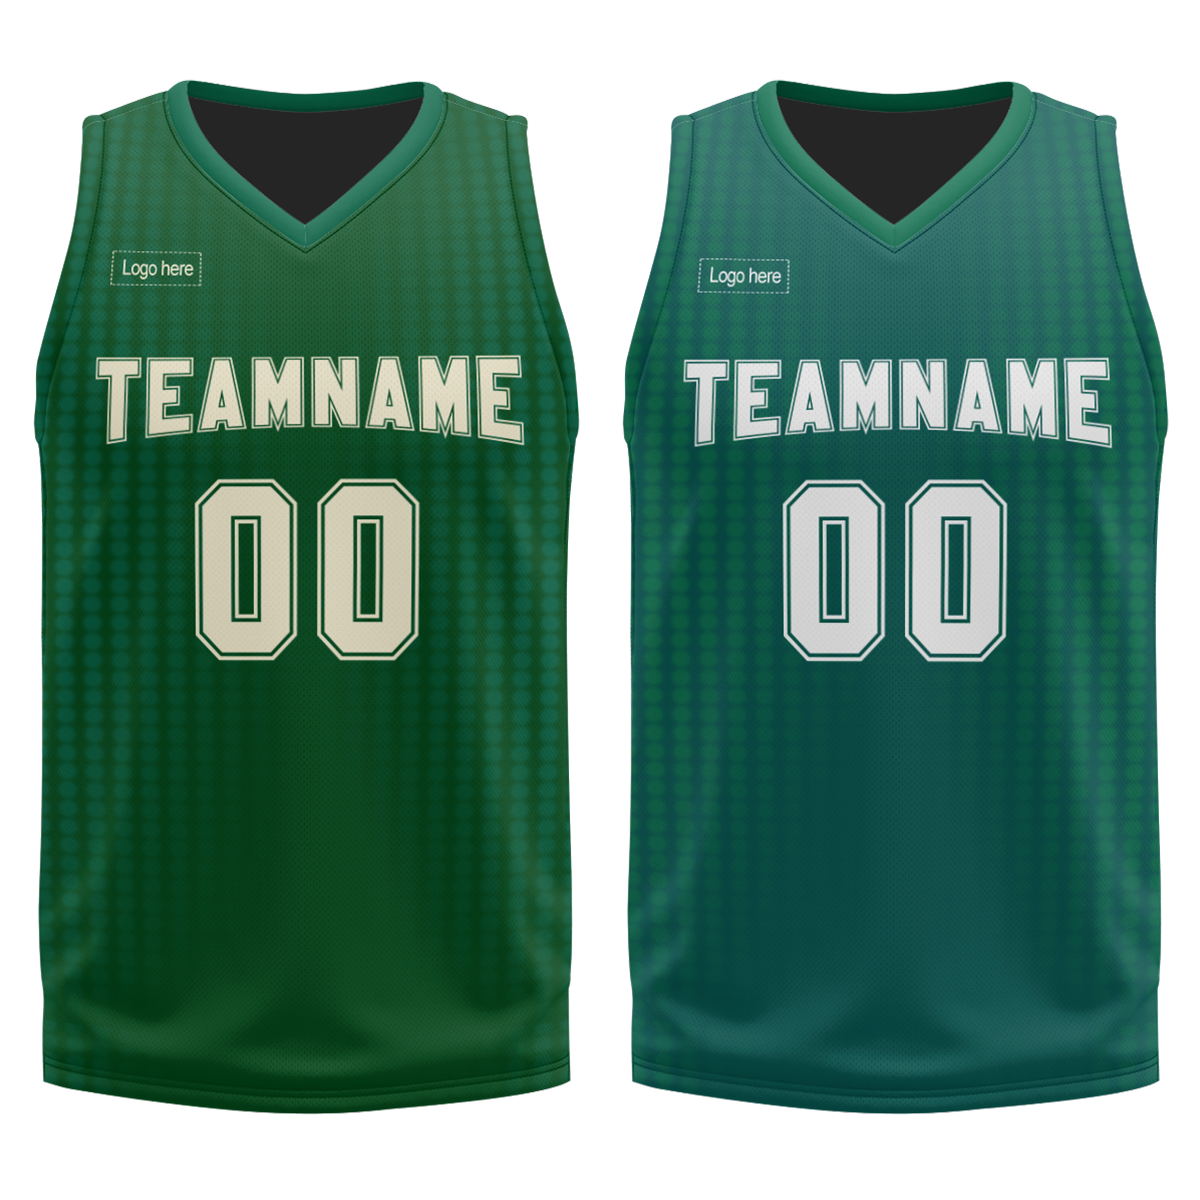 custom-sublimation-polyester-crewneck-quick-dry-club-basketball-jersey-blank-basketball-uniforms-sets-at-cj-pod-4